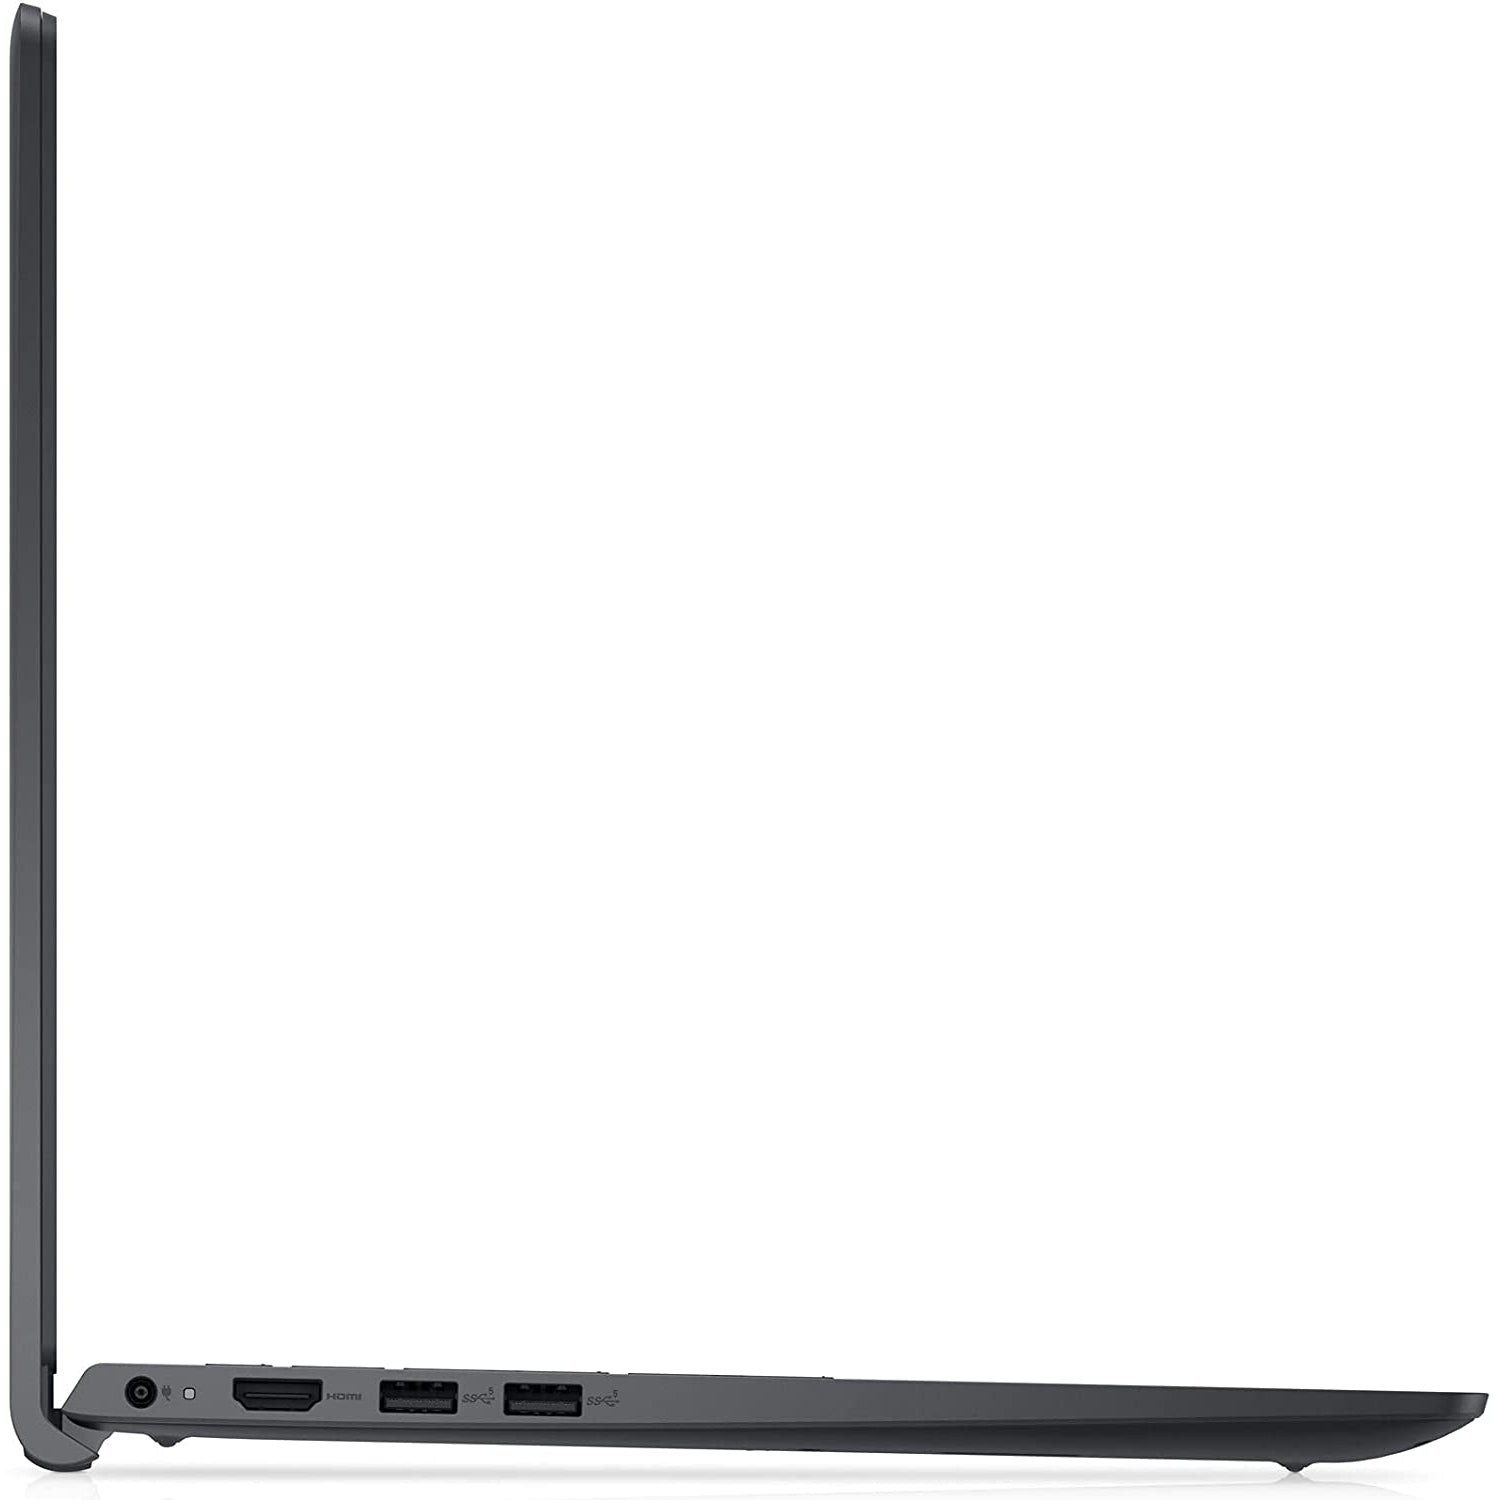 Dell Inspiron 15 3515 Laptop AMD Ryzen 5-3500U 8GB RAM 256GB SSD 15.6" Carbon Black - Refurbished Good